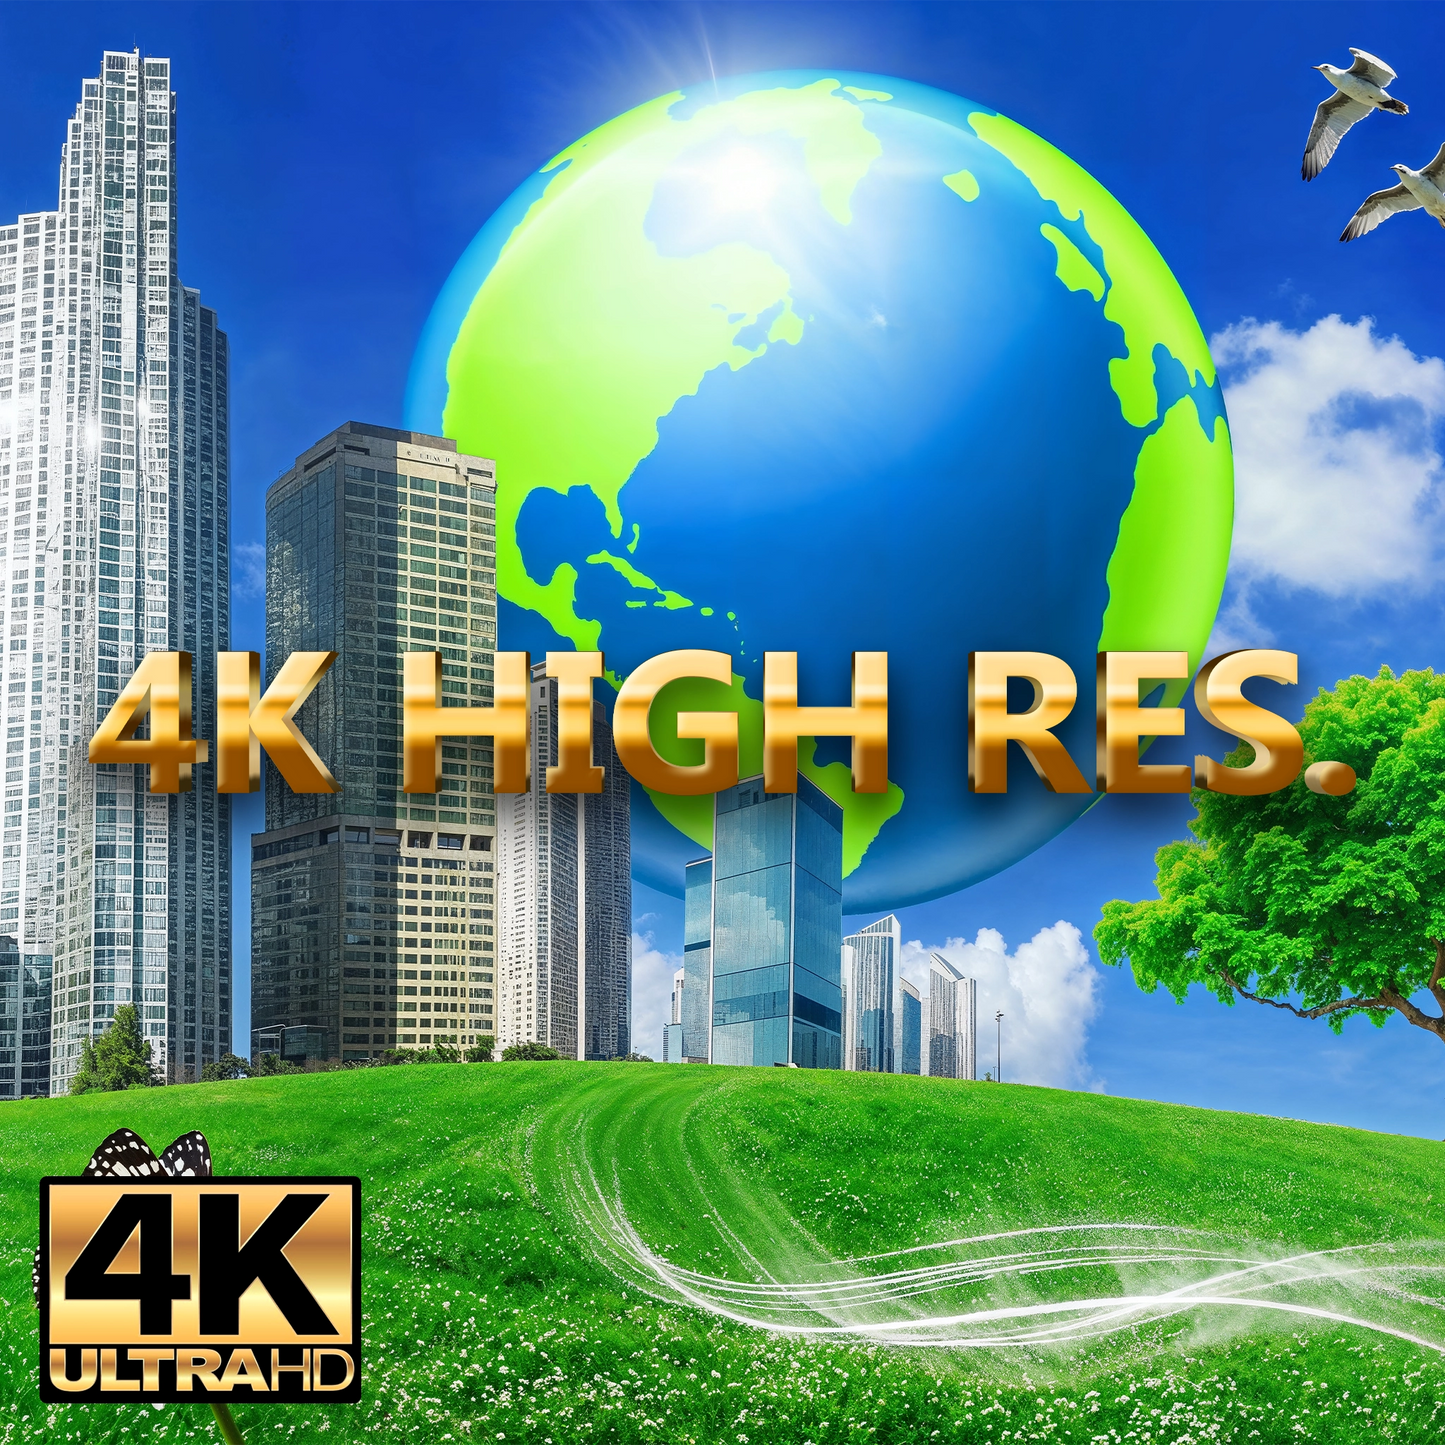 Frutiger Aero 4K Wallpapers - Ultra HD High Resolution Backgrounds for Desktop